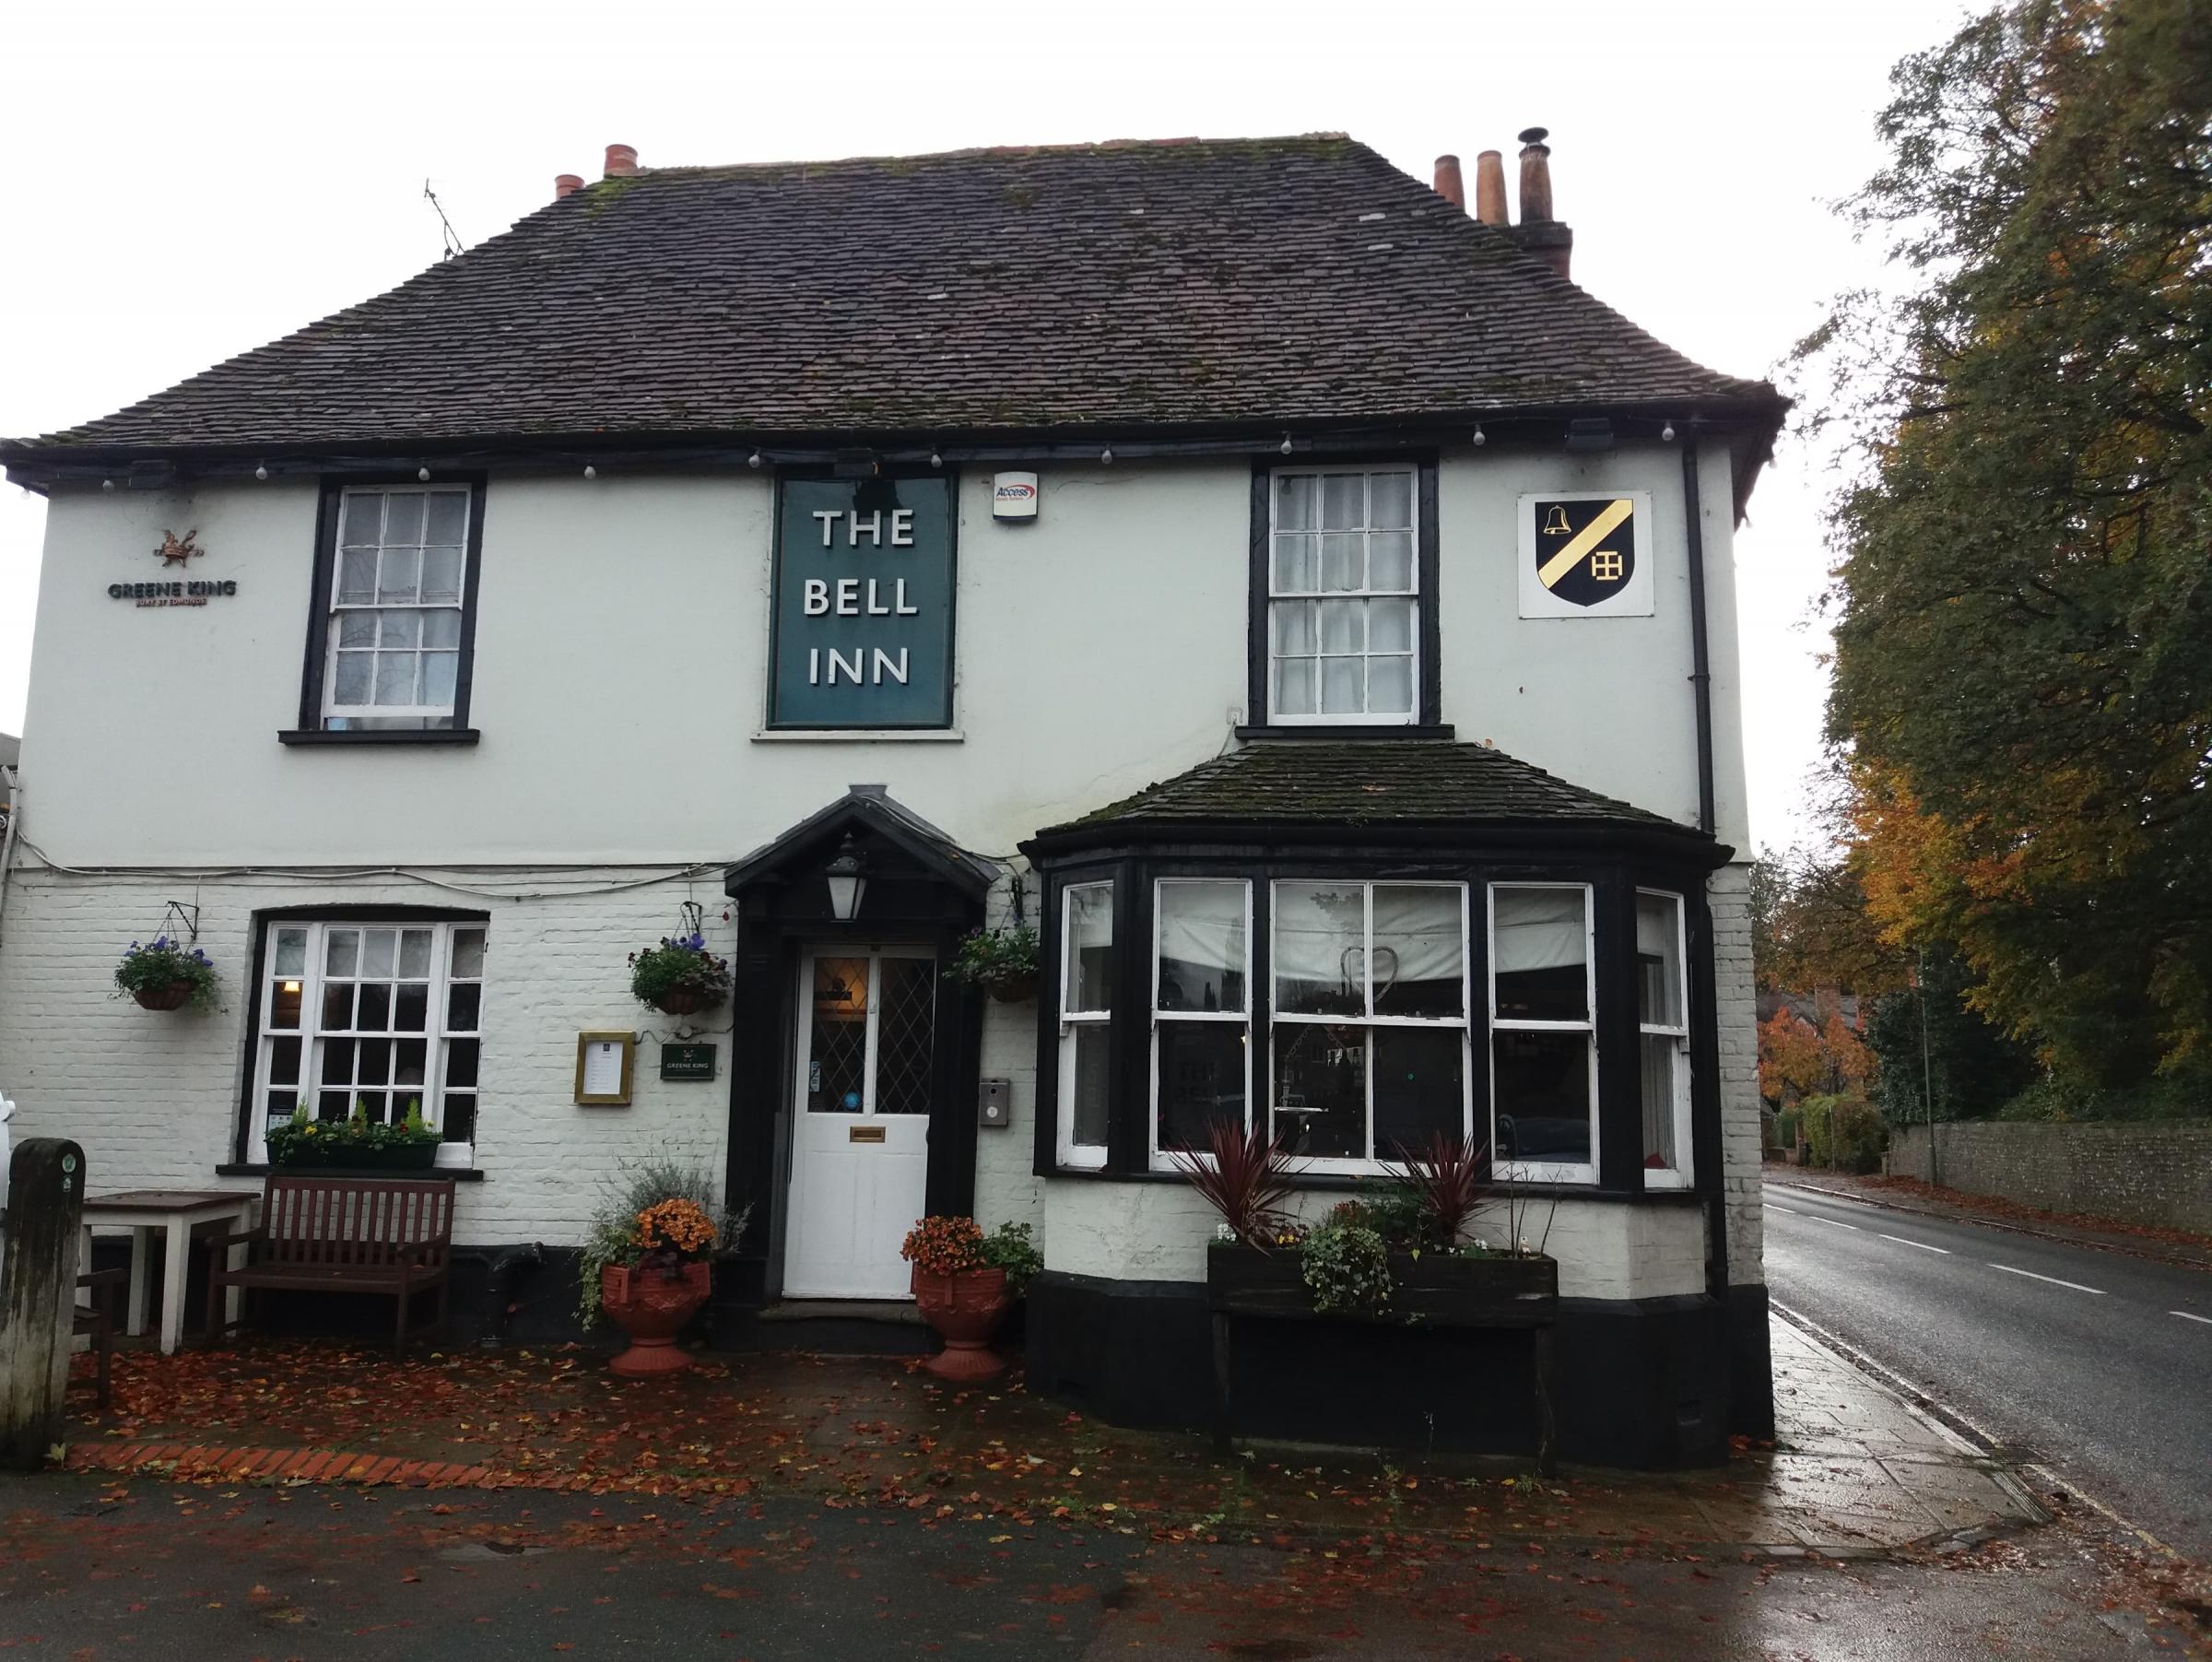 The Bell Inn, St Cross, Winchester